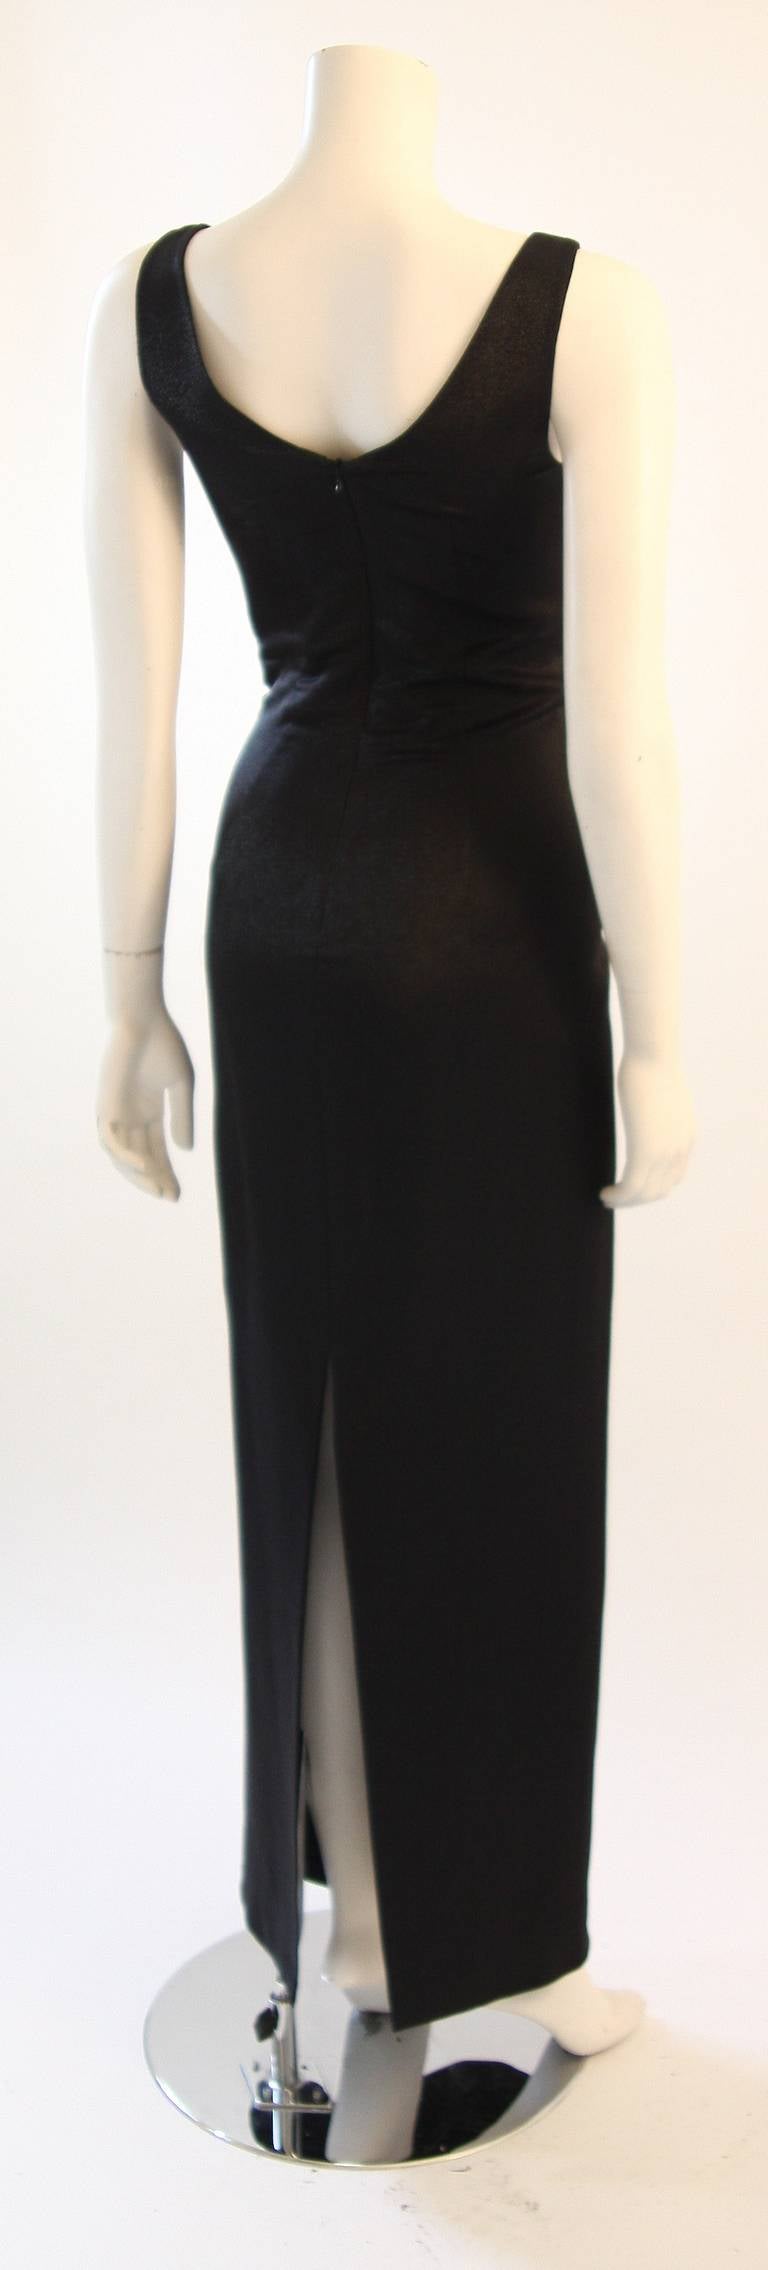 Versace Metallic Black Evening Gown Size 44 1